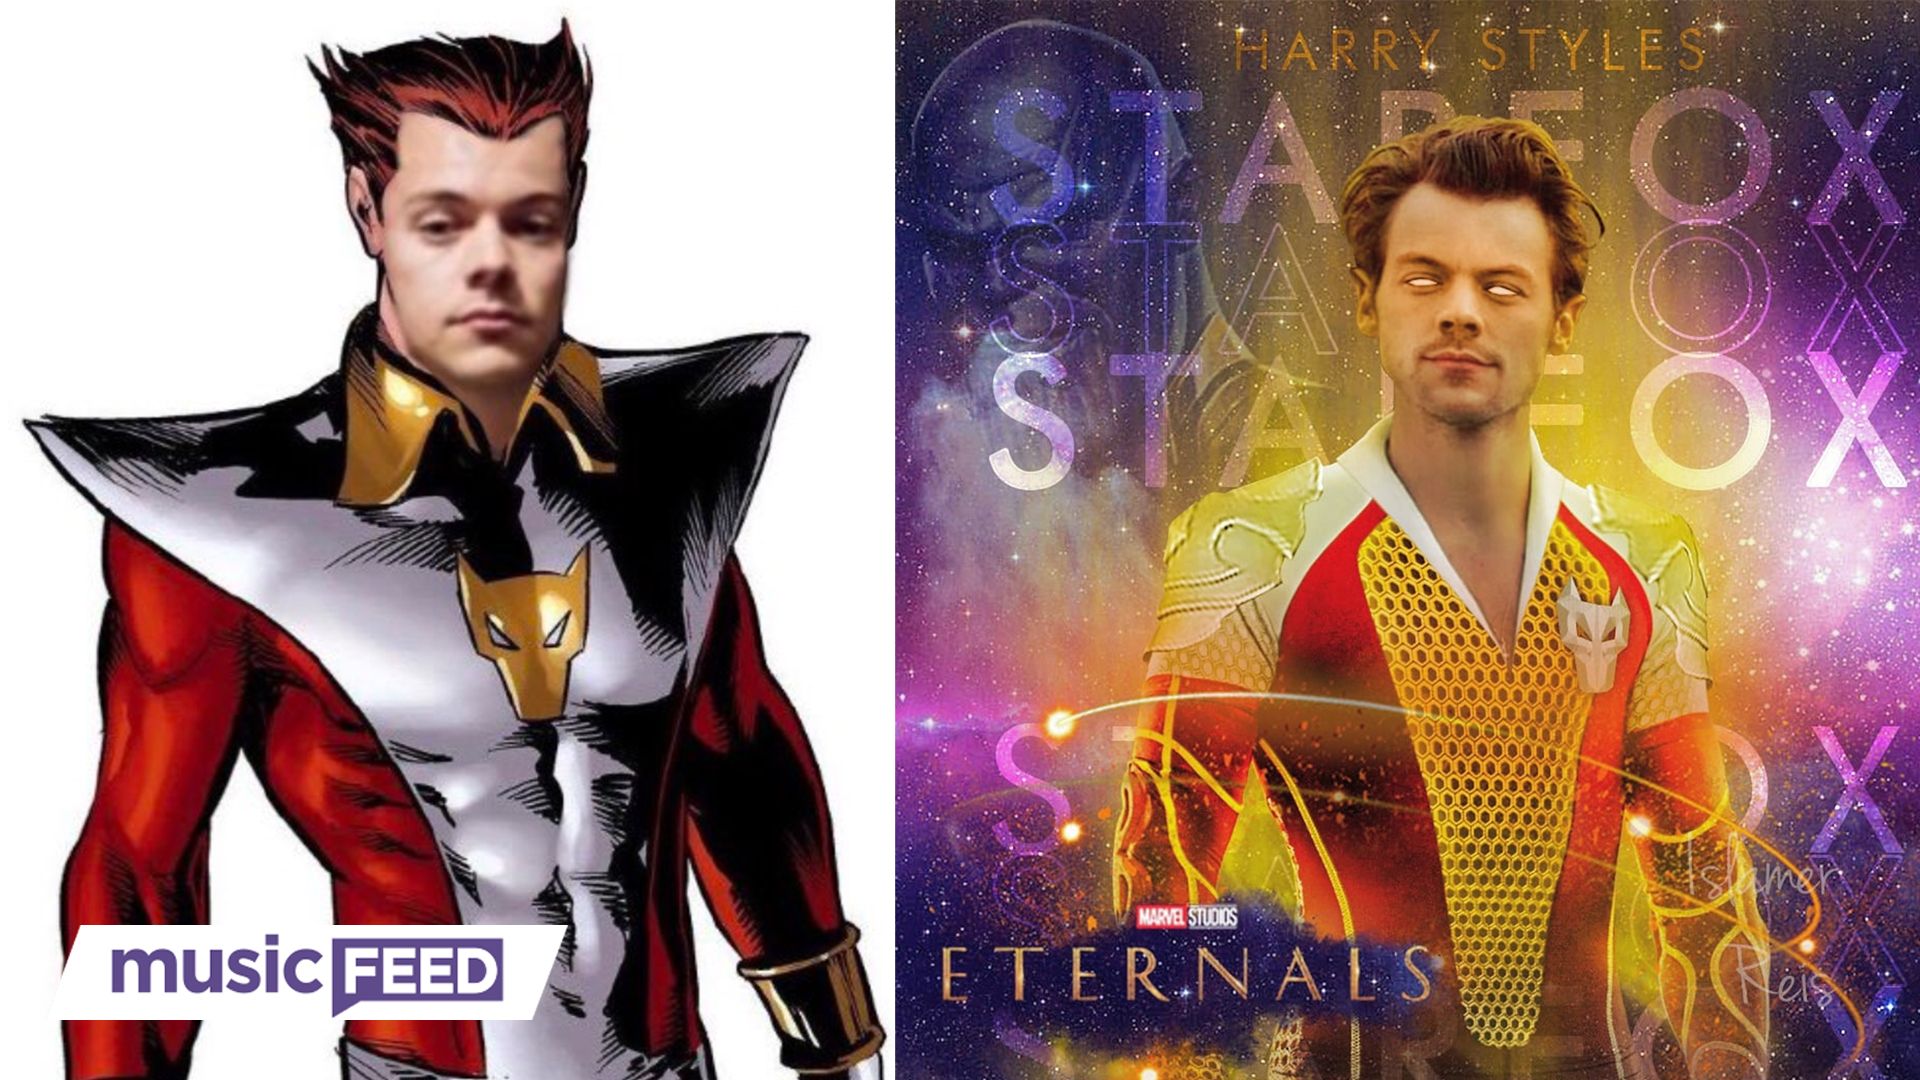 Eternals' Cast Superstar Harry Styles as Super Problematic Superhero